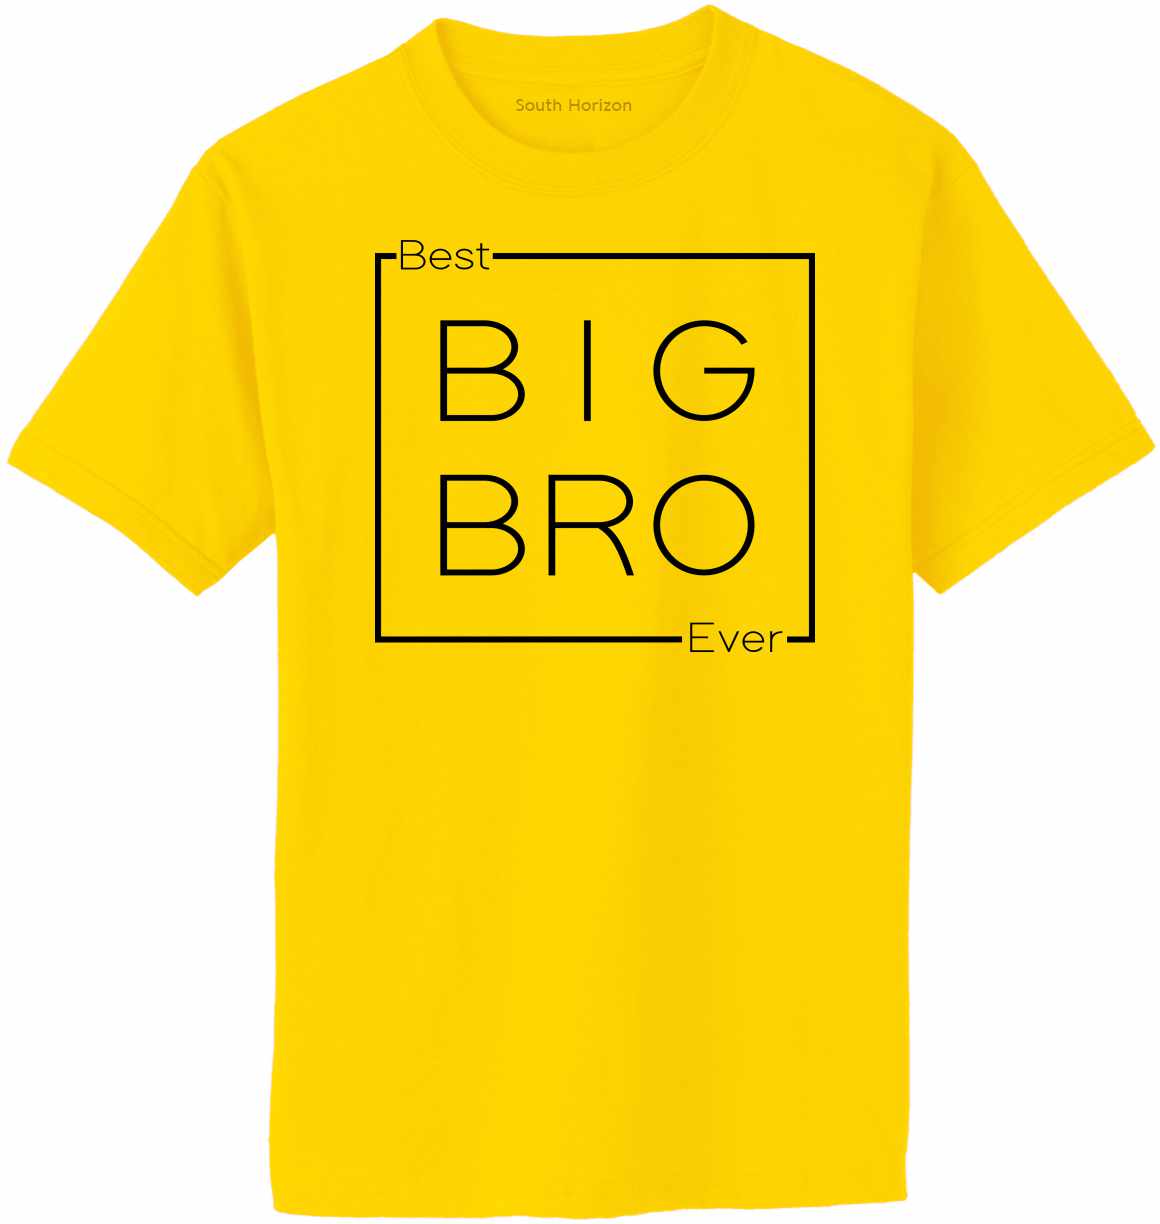 Best Big Bro Ever - Big Brother - Box on Adult T-Shirt (#1339-1)